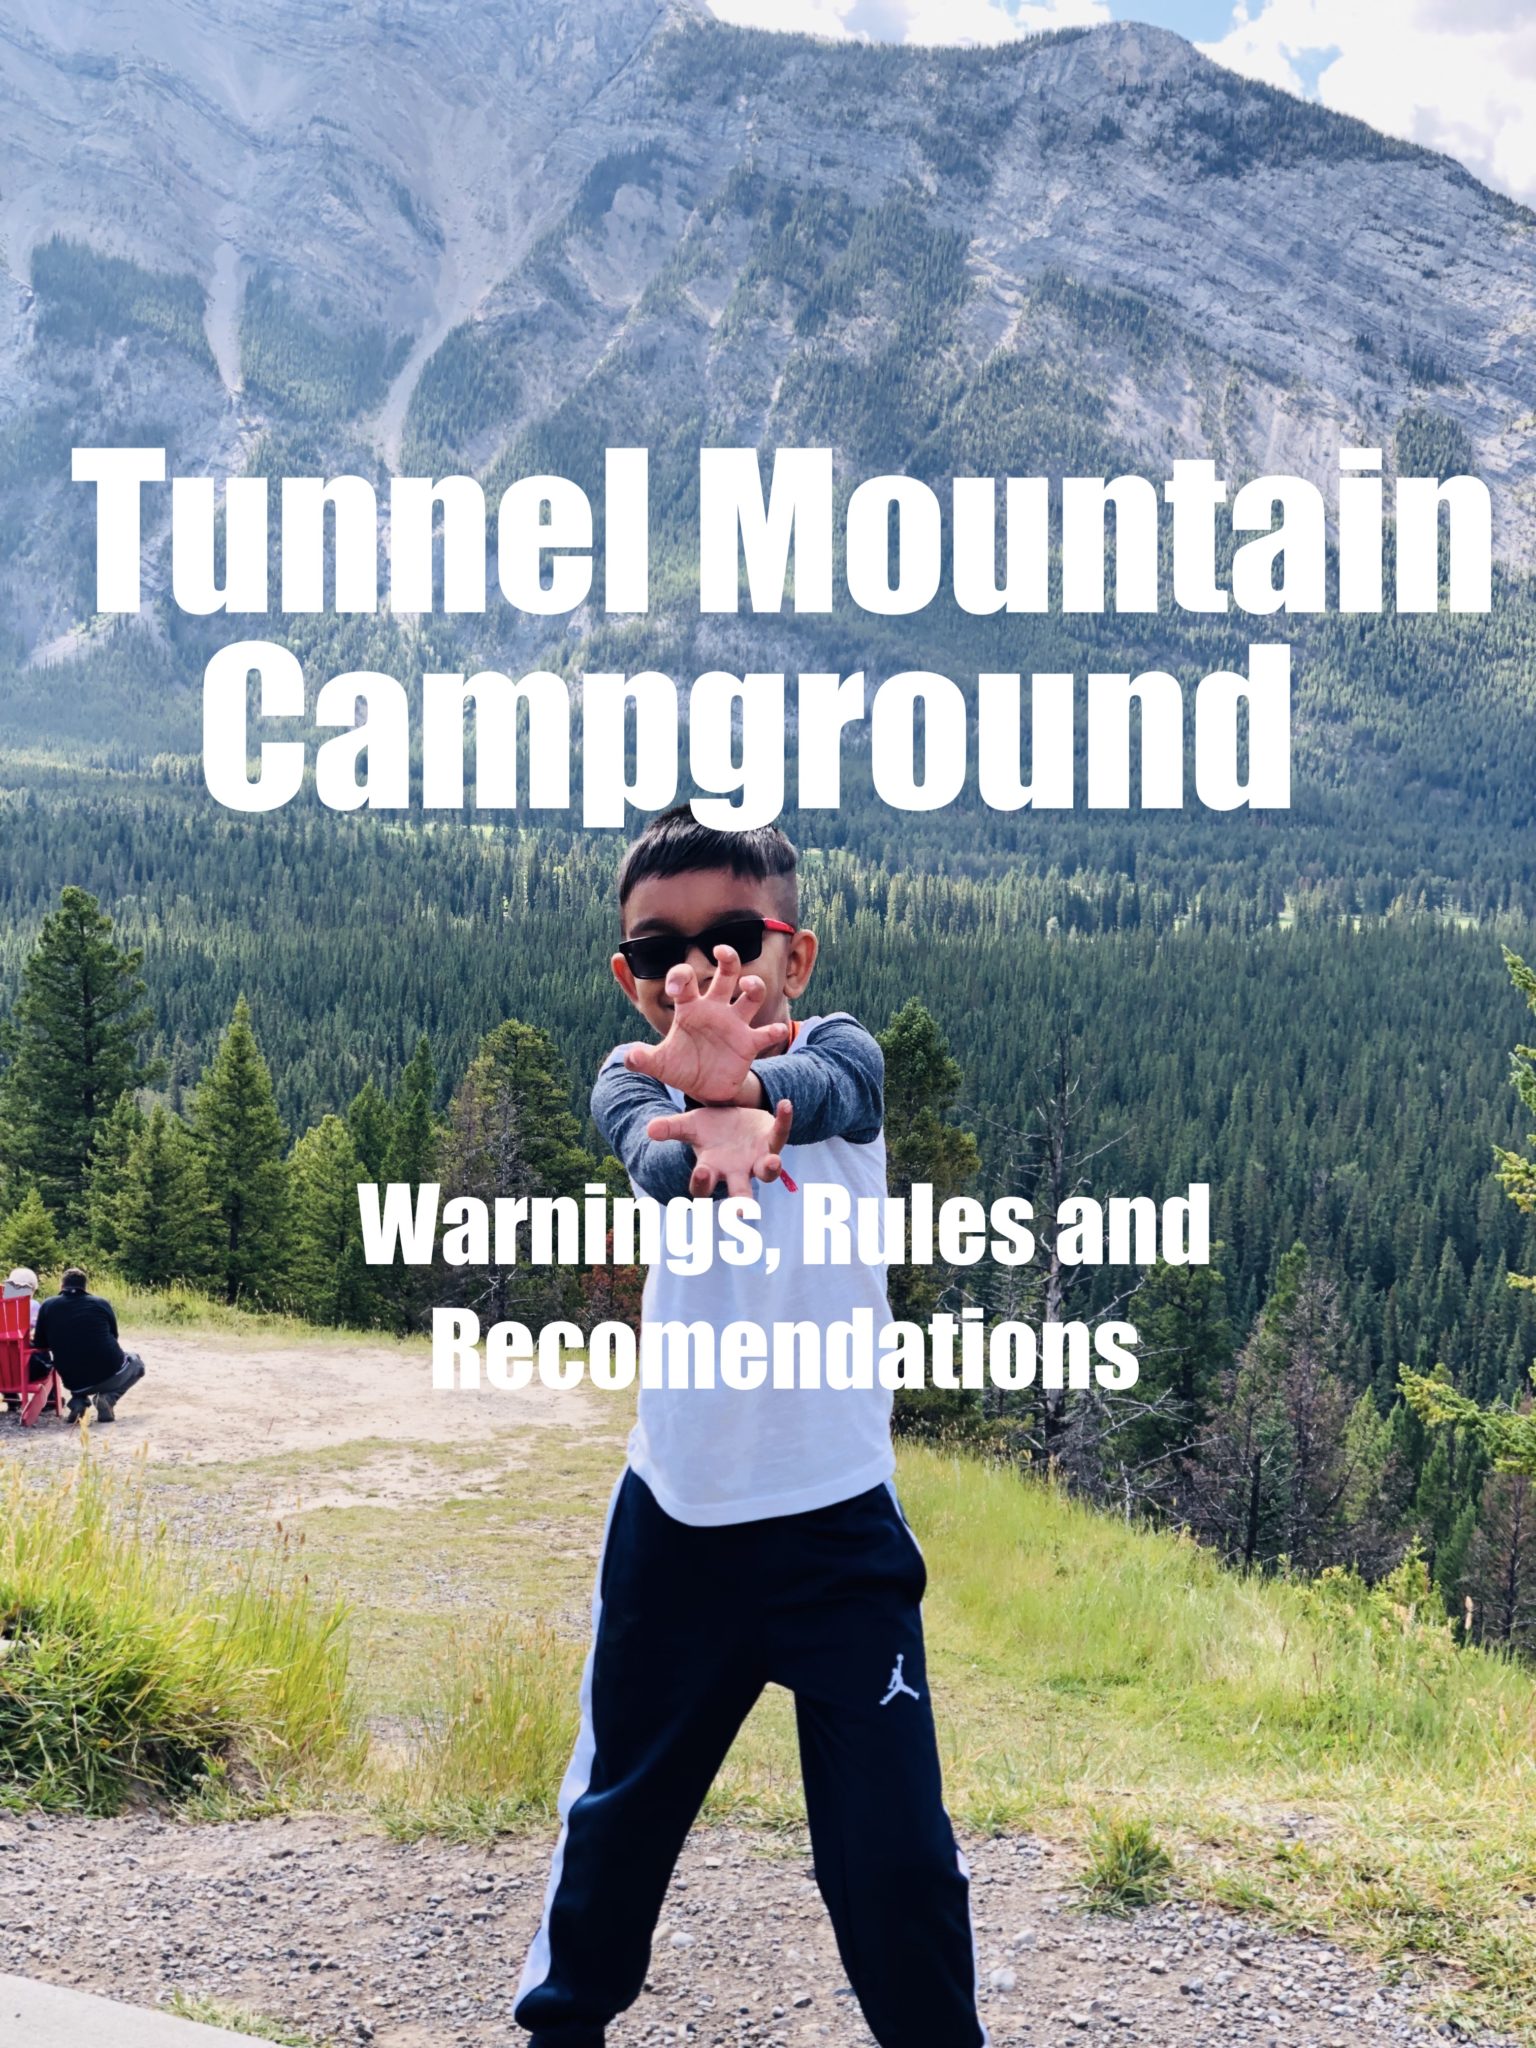 Tunnel Mountain Village Campground Title